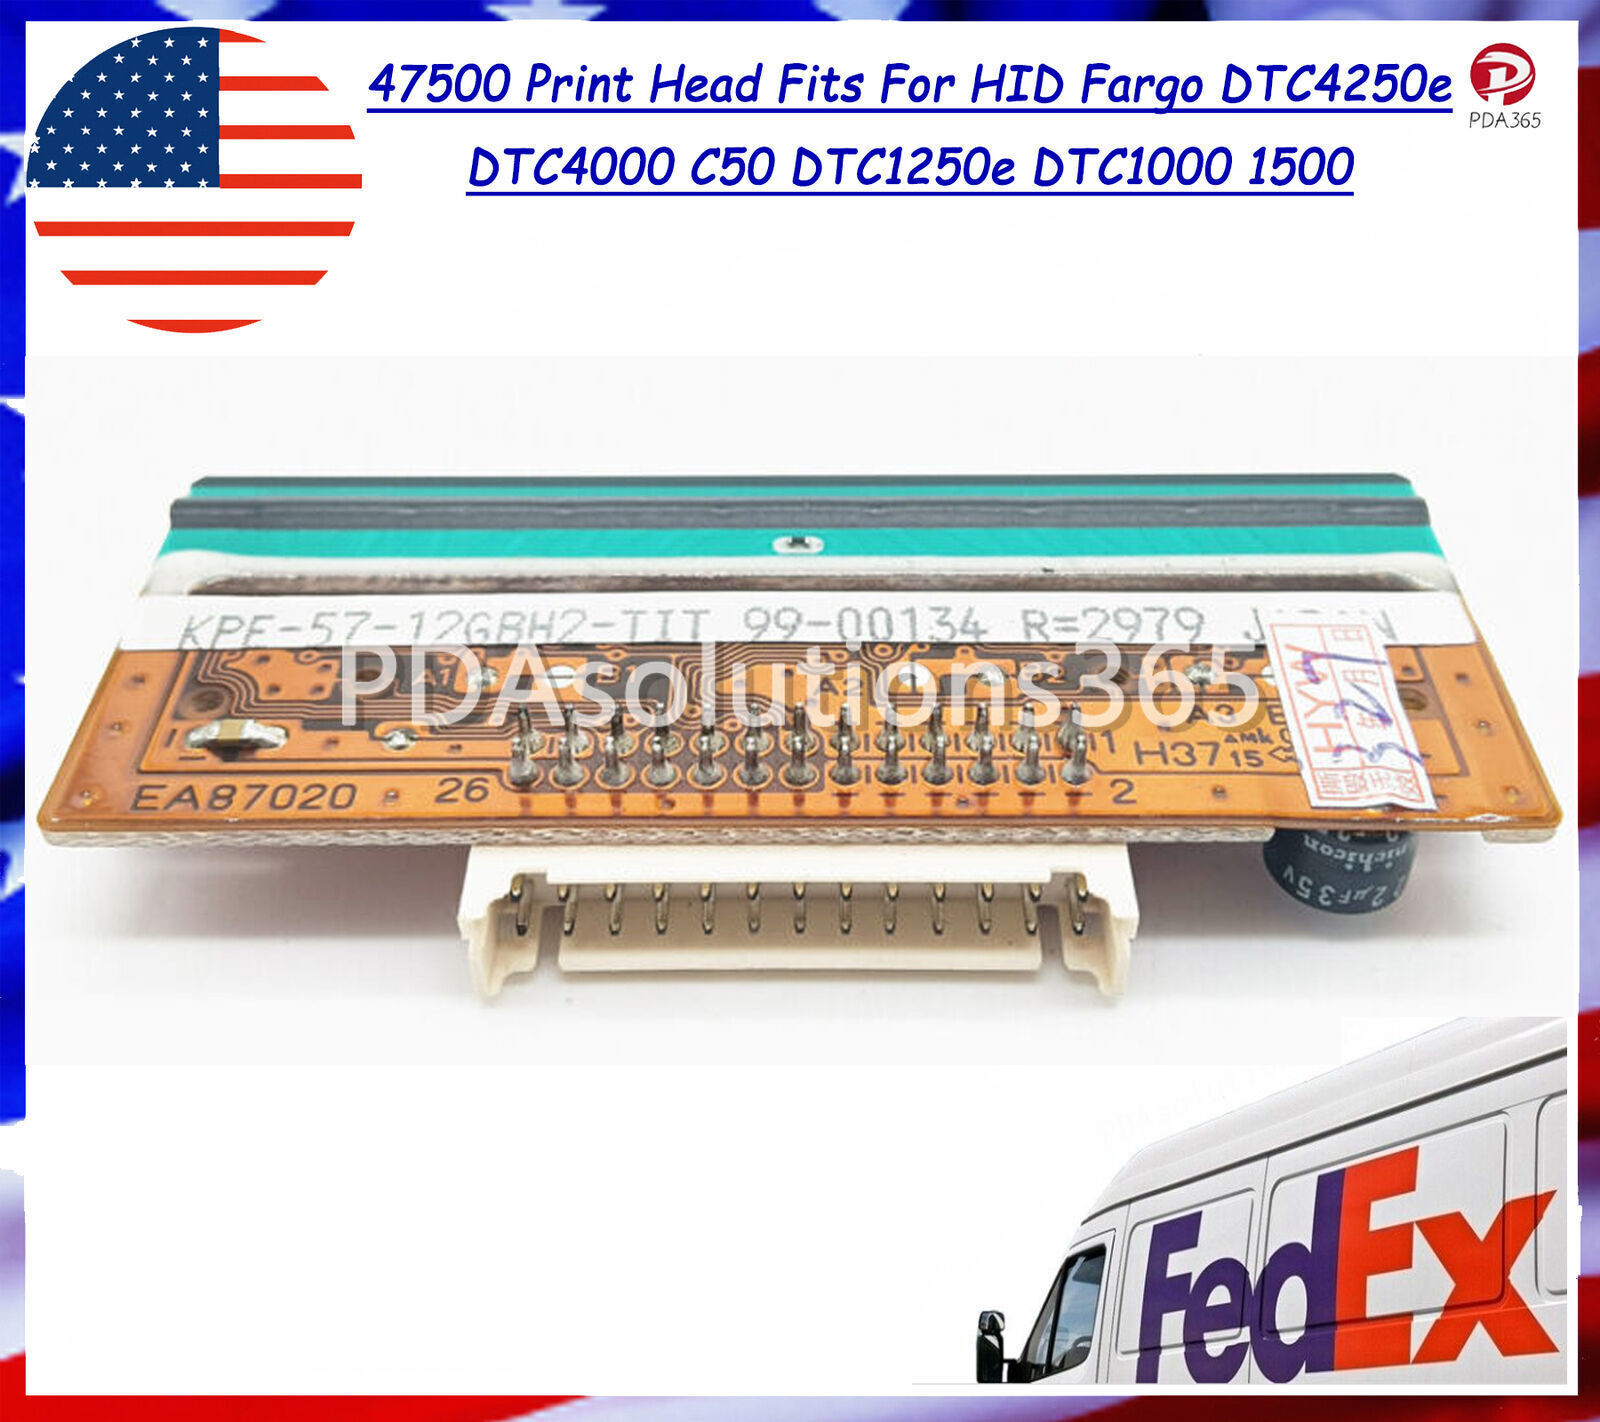 47500 Print Head Fits For HID Fargo DTC4250e DTC4000 C50 DTC1250e DTC1000 1500